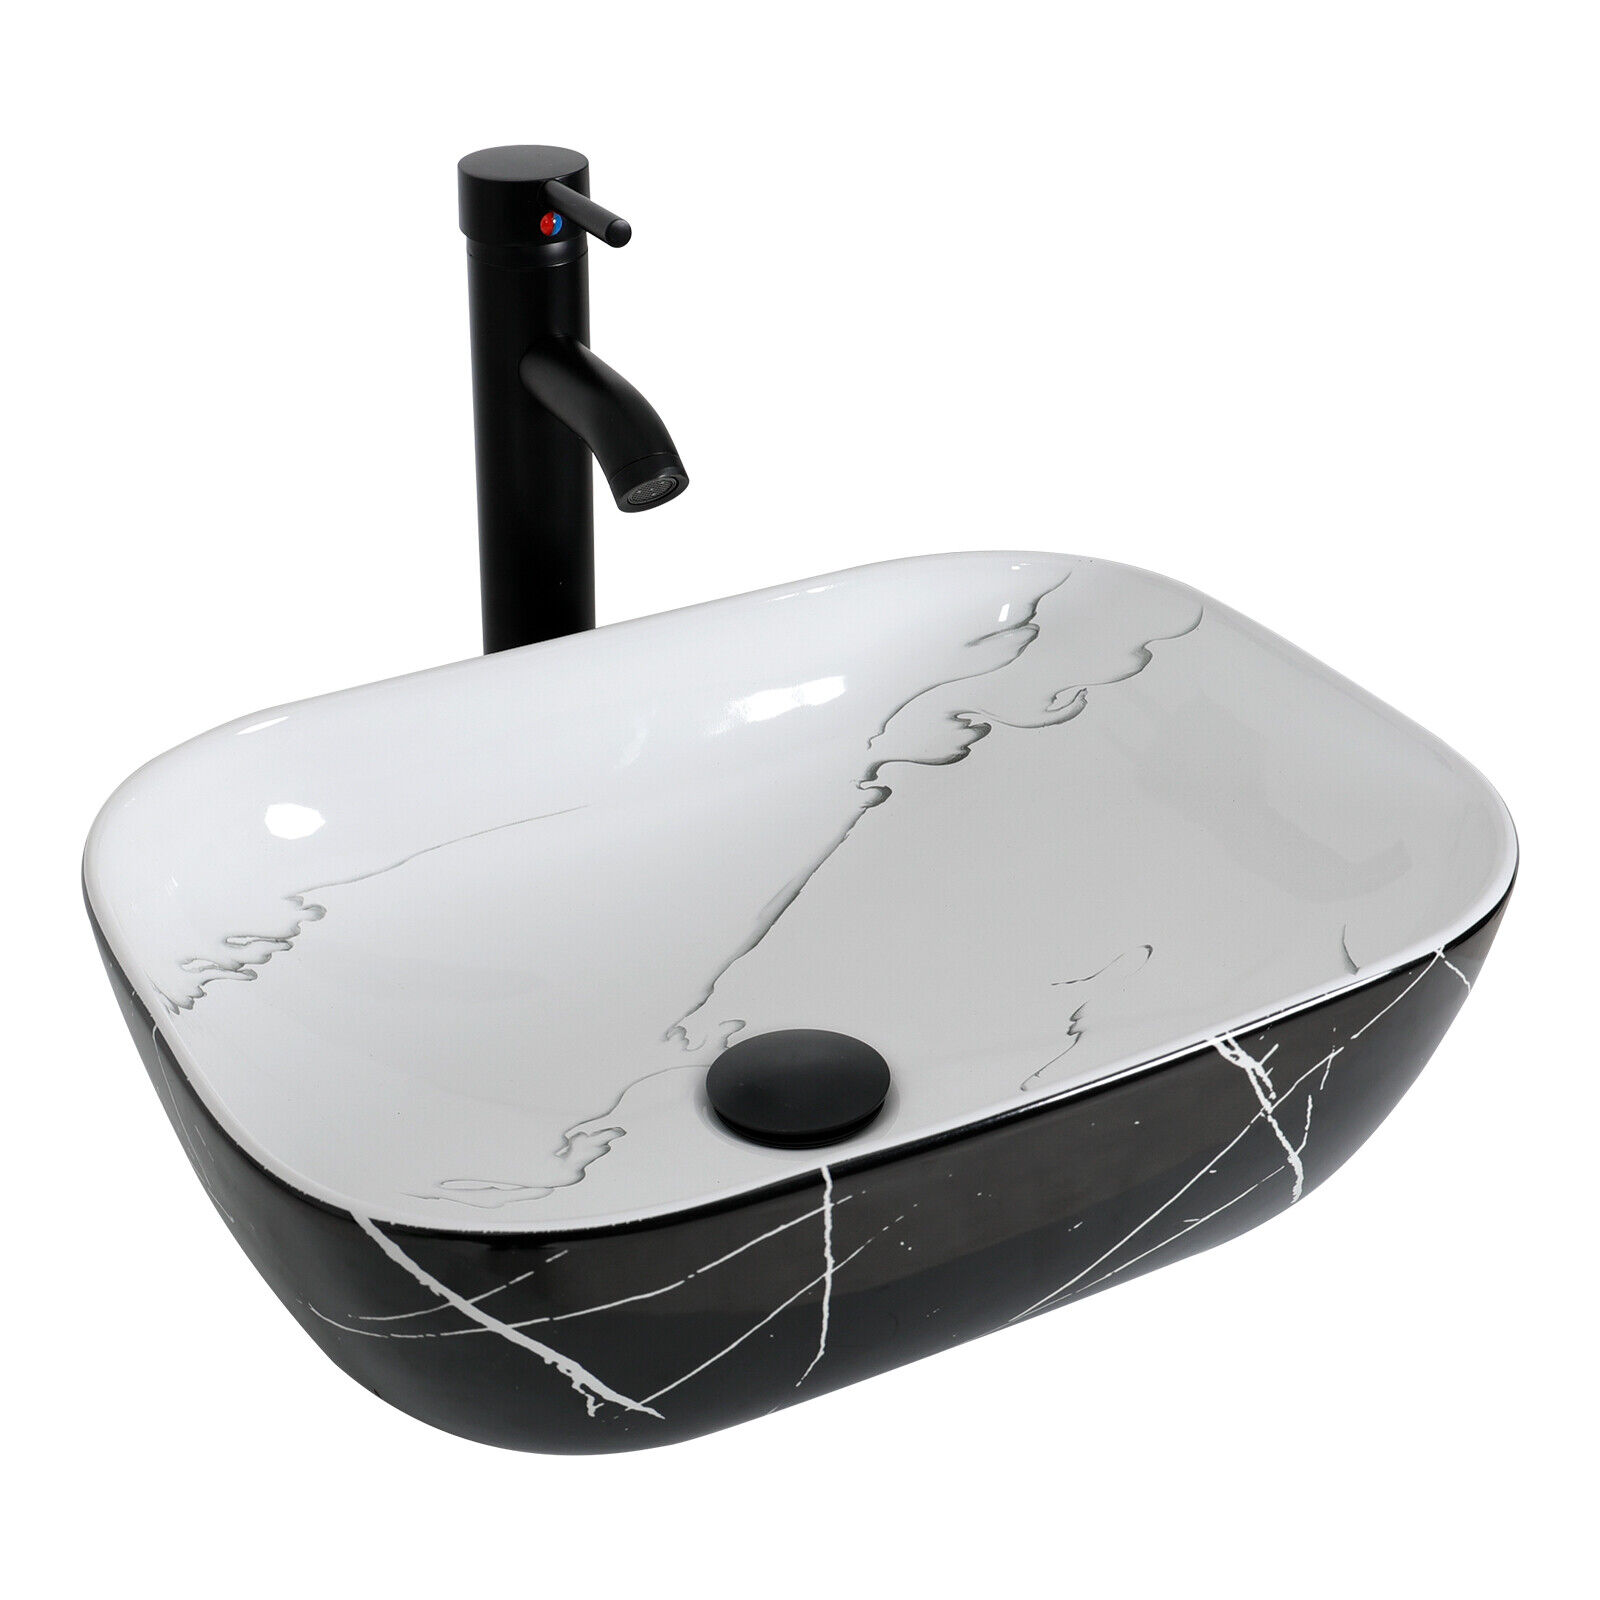 ELECWISH Bathroom Vessel Sink Ceramic Basin Bowl Countertop Basin with Faucet